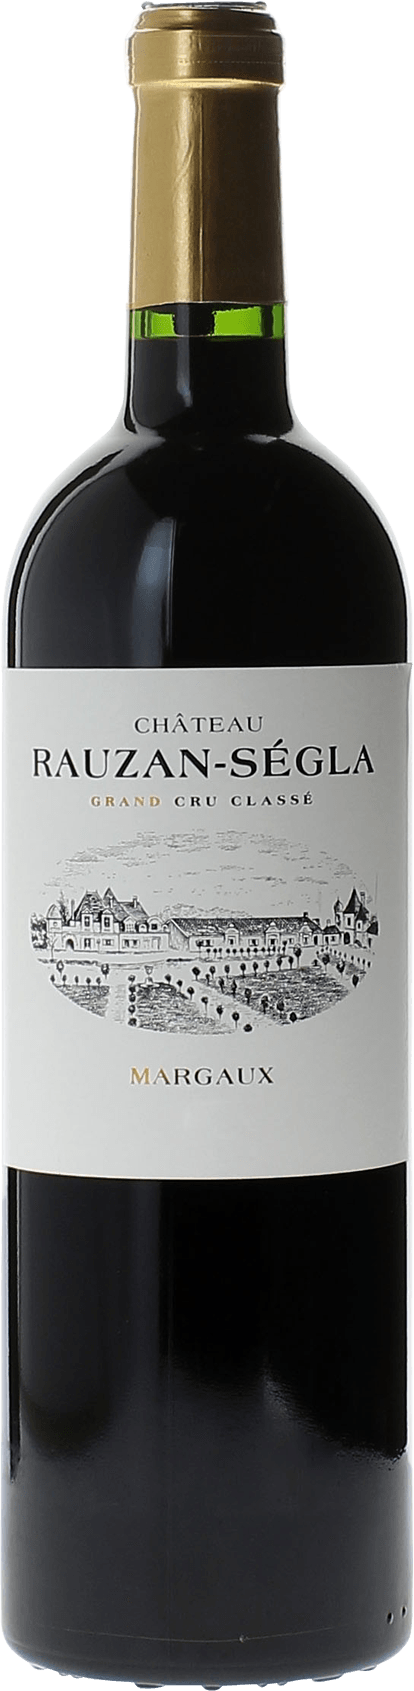 Rauzan-segla 2002 2me Grand cru class Margaux, Bordeaux rouge